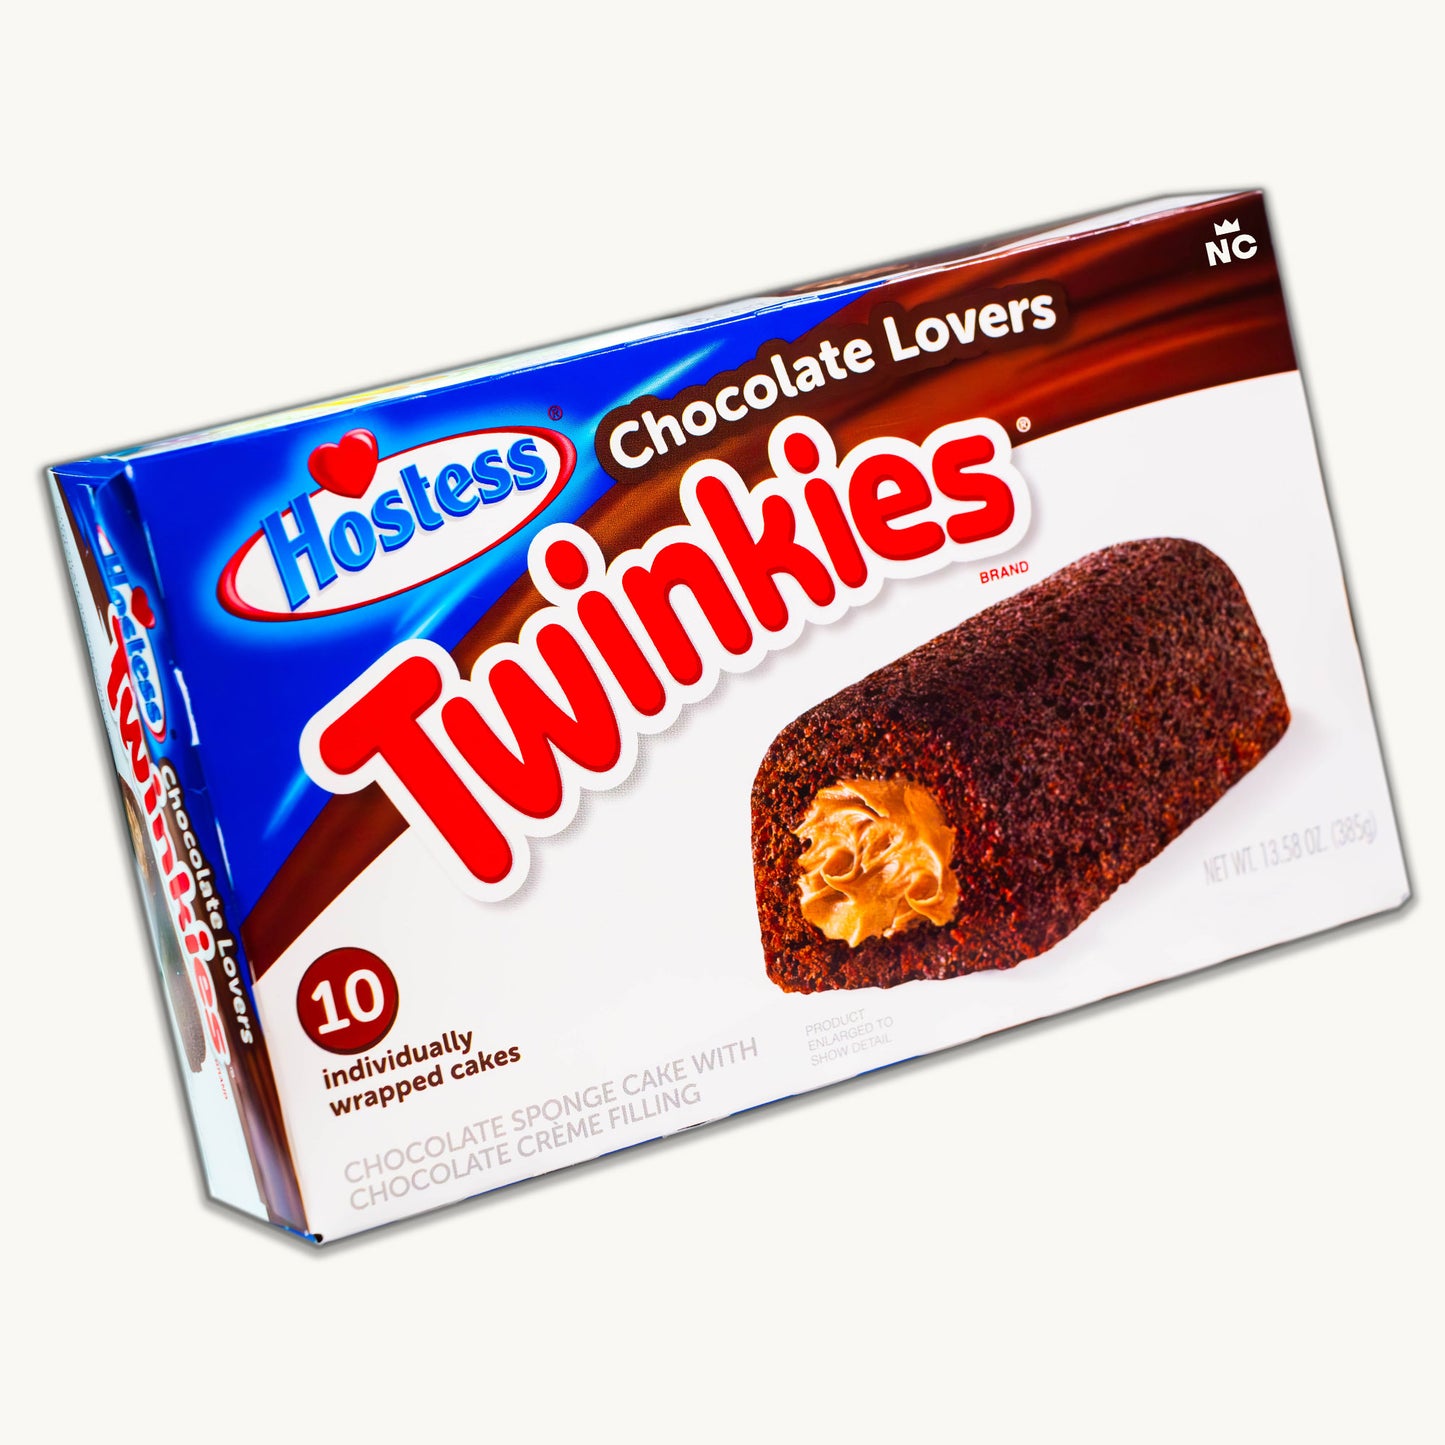 Hostess Chocolate Lovers Twinkies 10ct